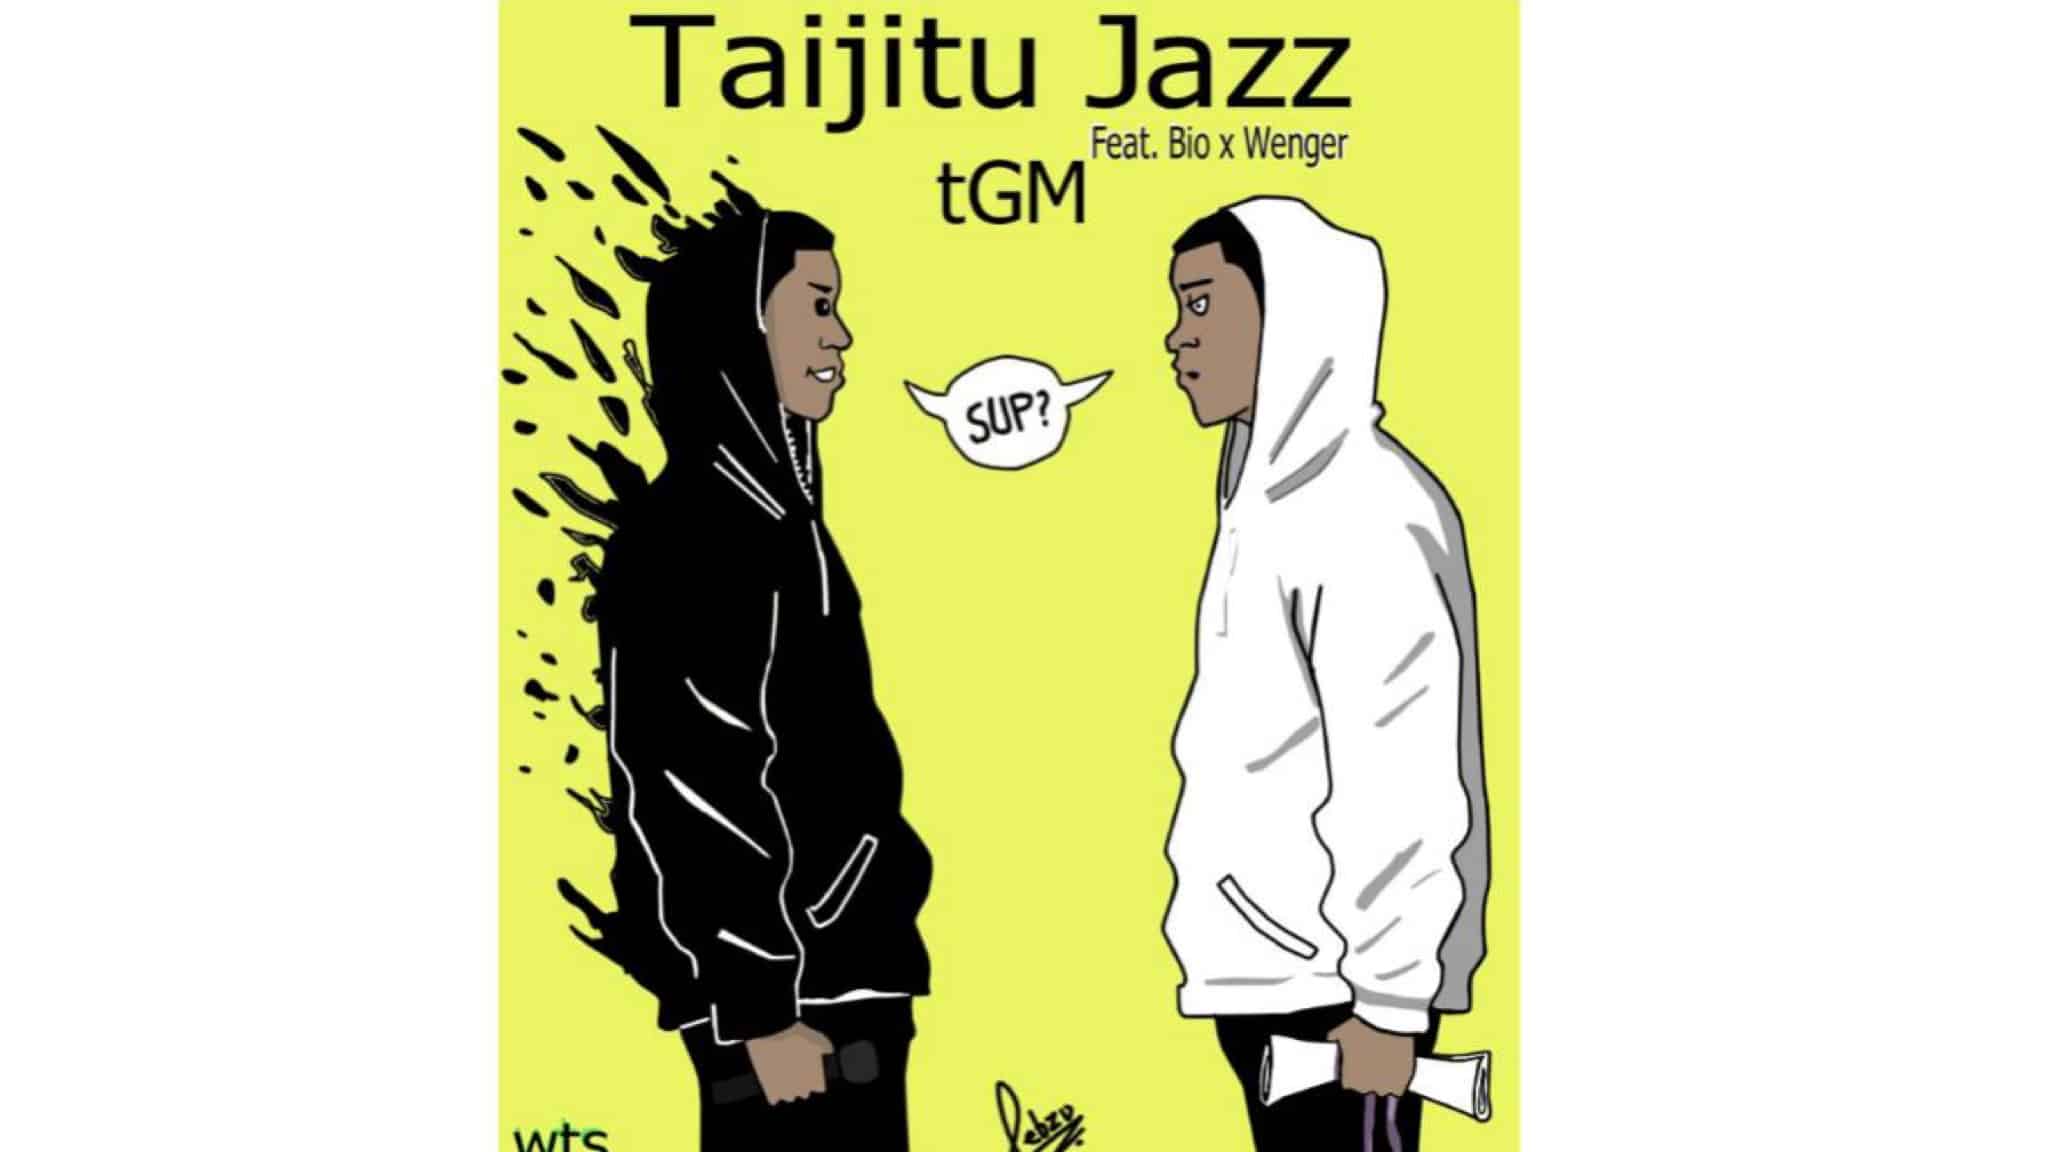 Listen to “Taijitsu Jazz” by tGM featuring Bio and Wenger